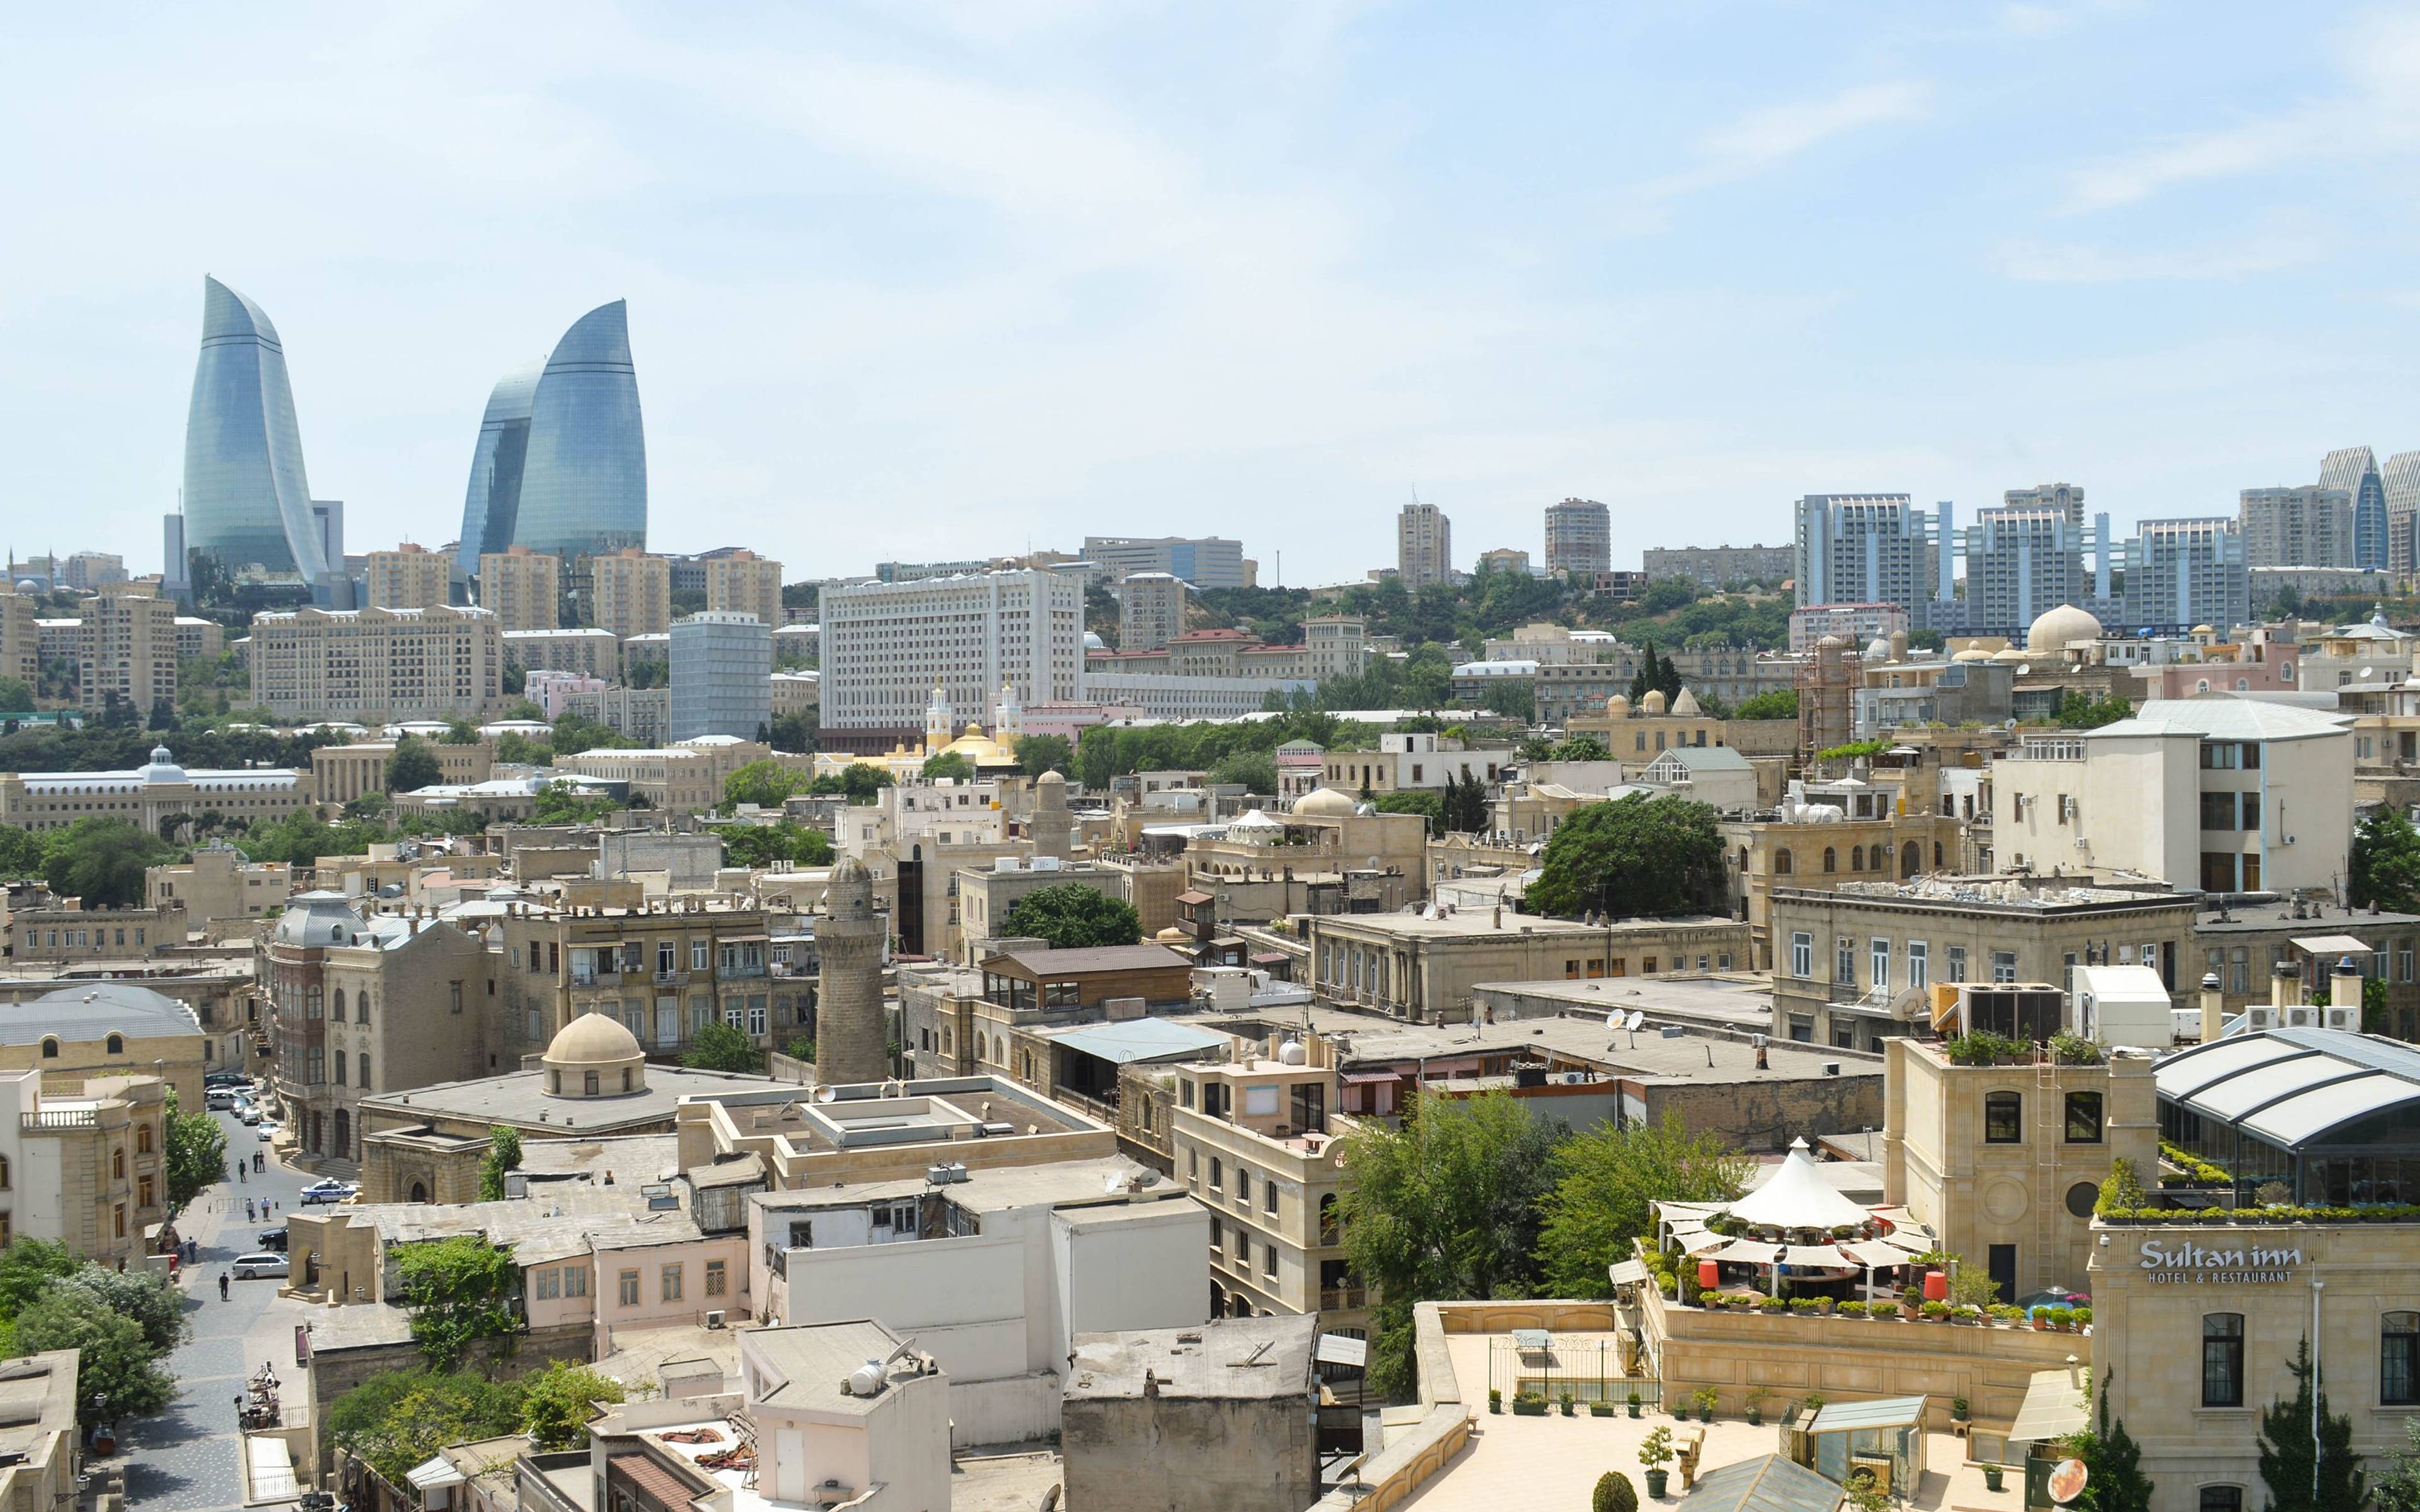 Visita dei monumenti storici a Baku